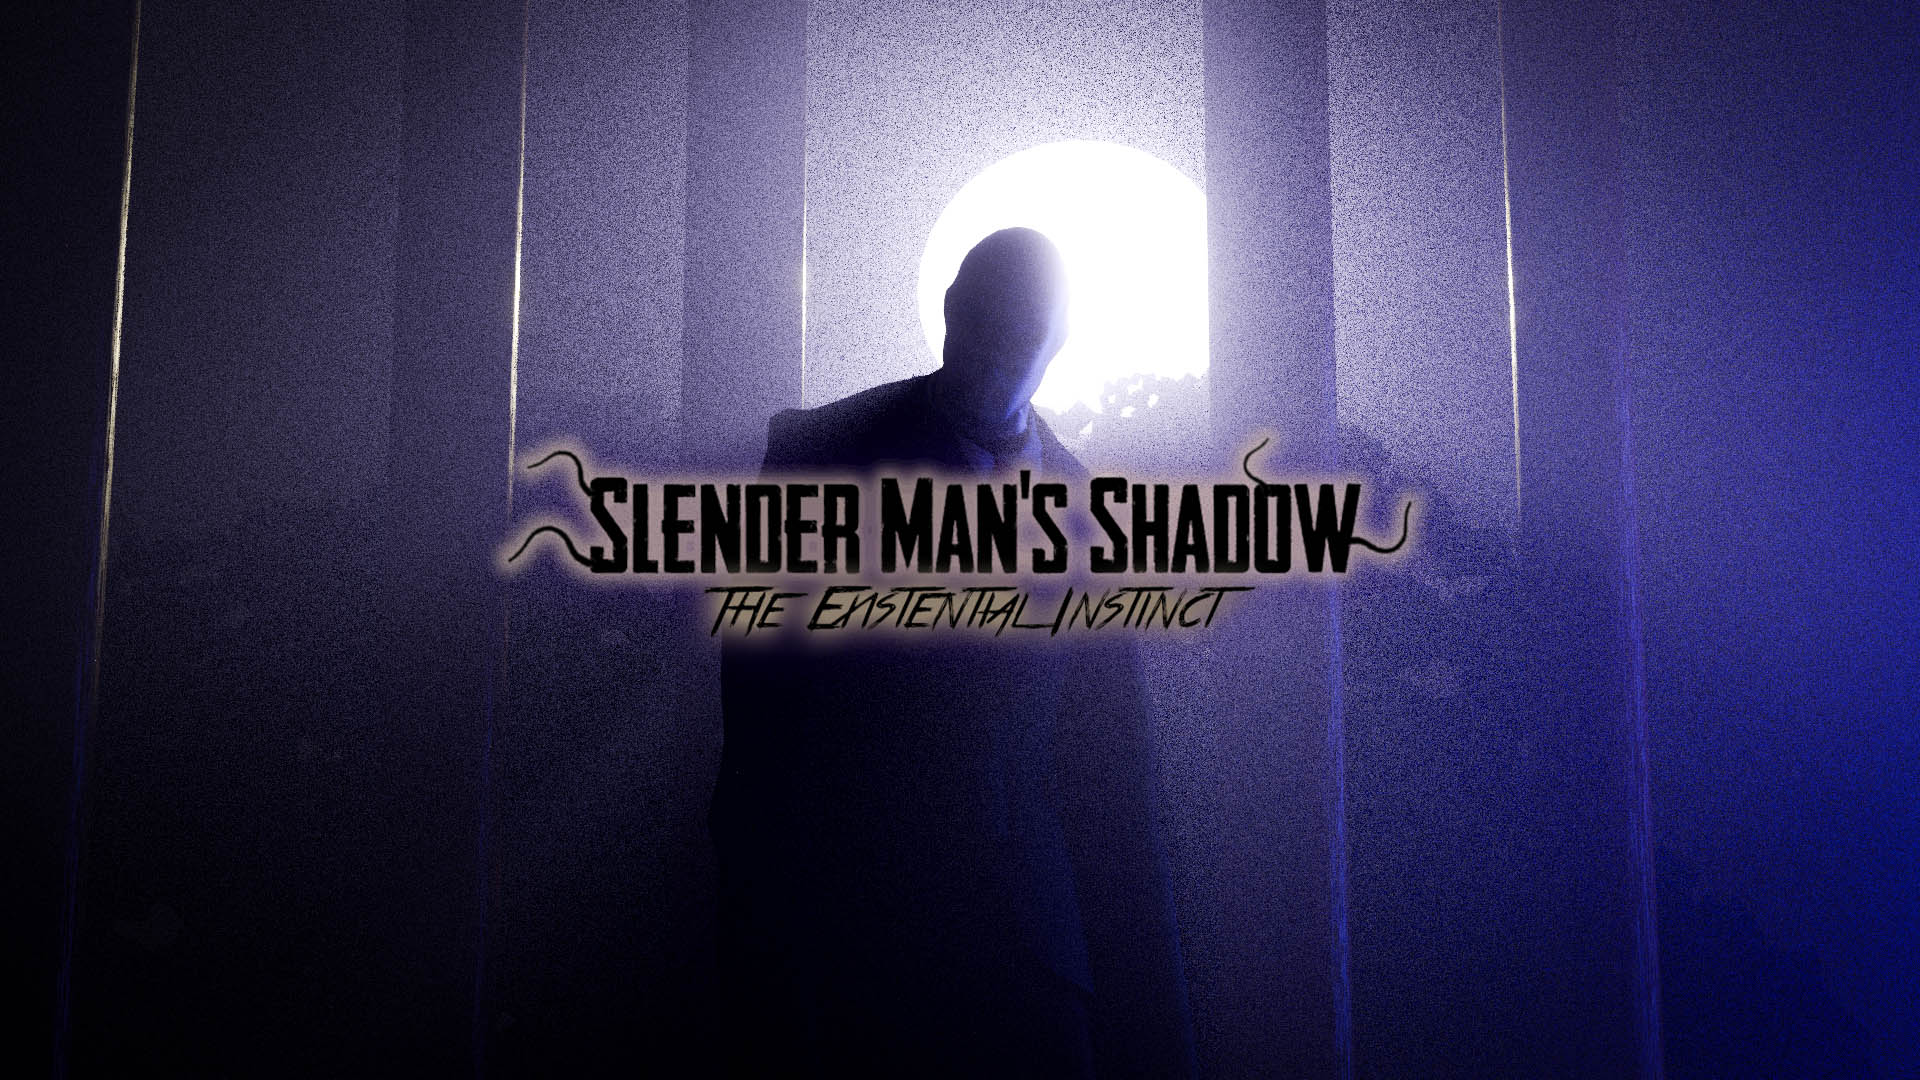 Slenderman's Shadow The Existential Instinct